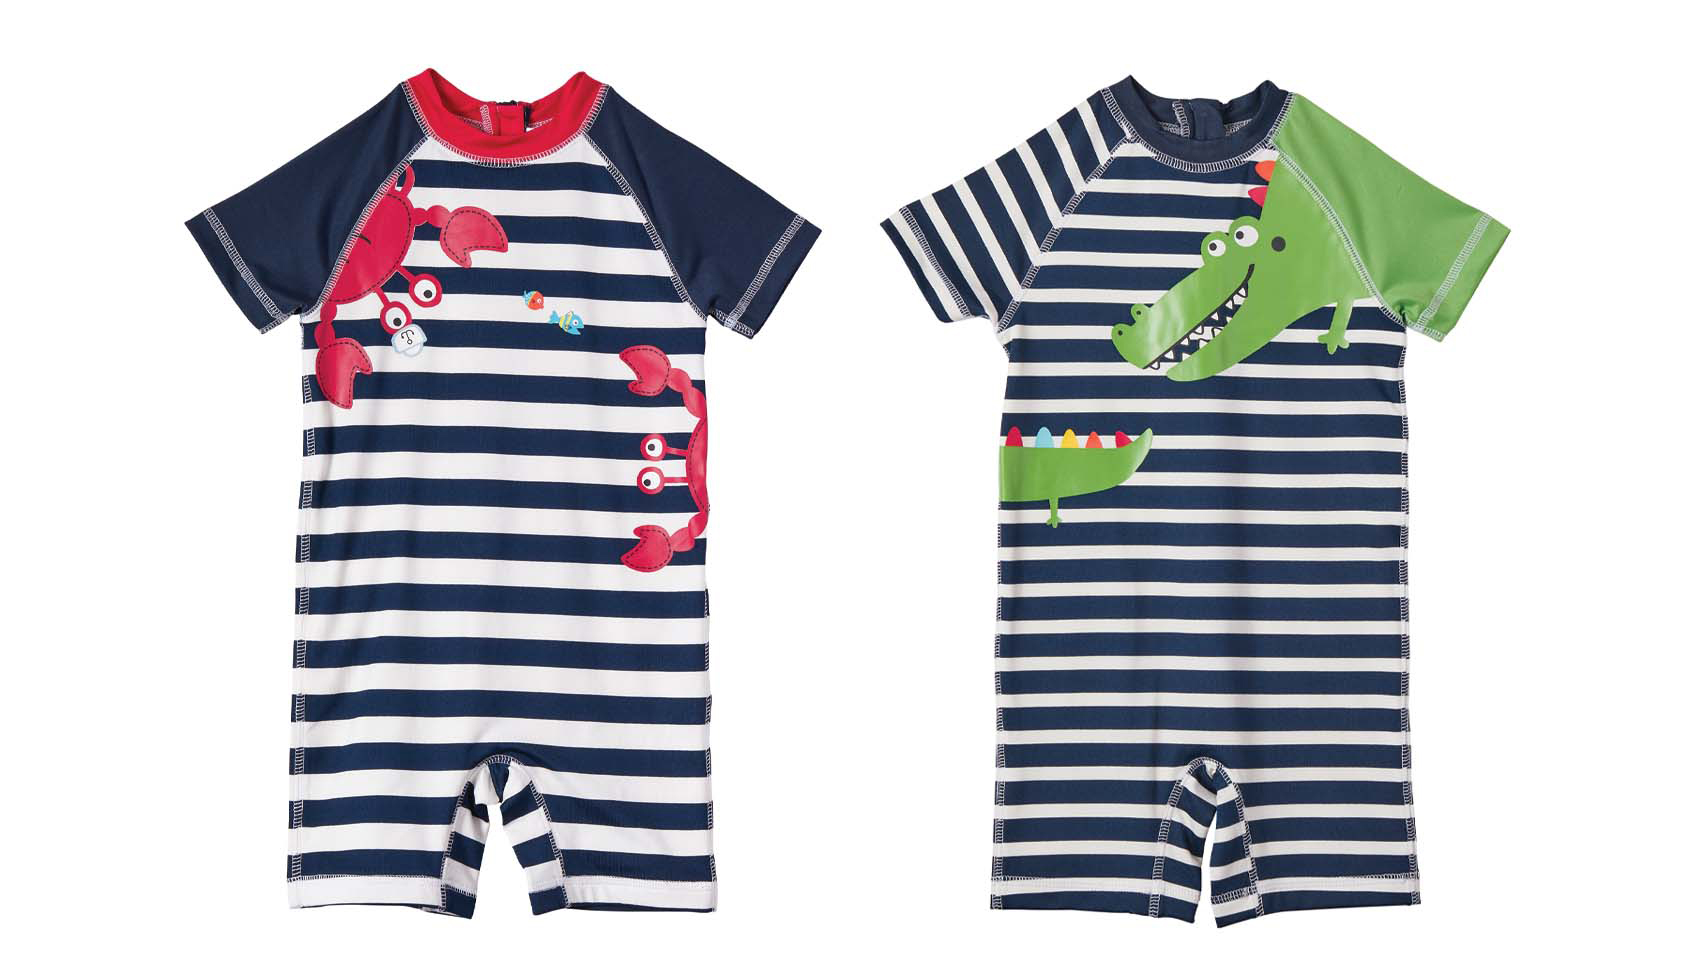 Infant Boy's Short-Sleeve Striped Rash Guard Onesies w/ Embroidered Crab & Crocodile Print - Sizes 9